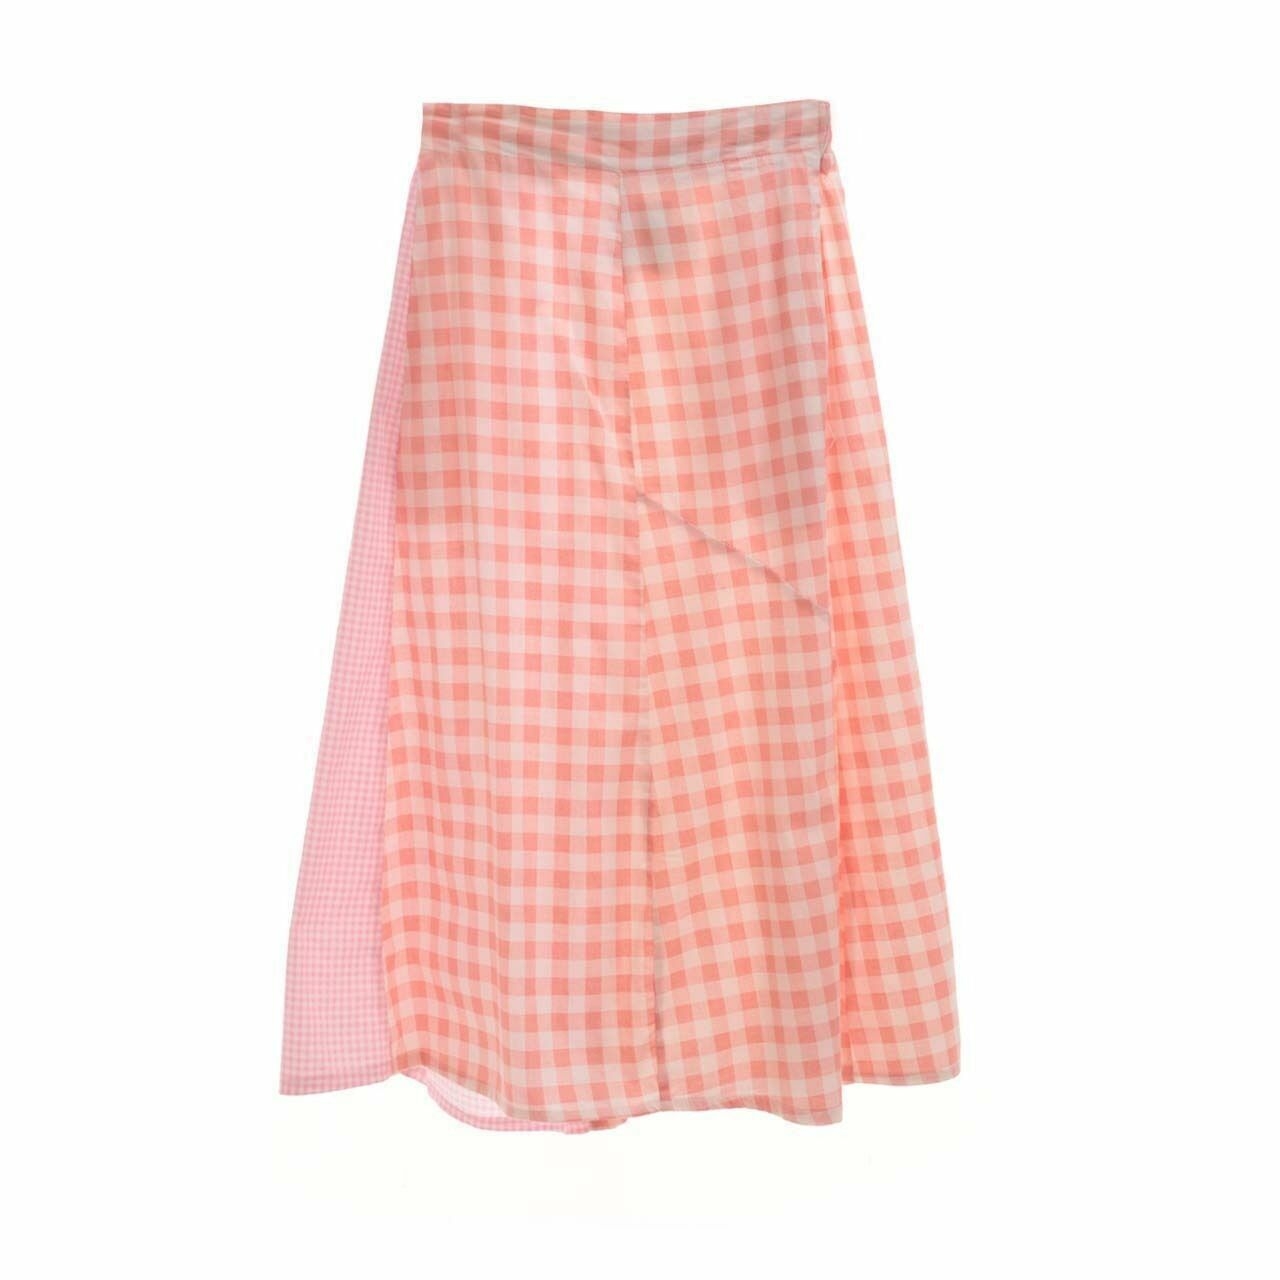 IKYK for Someday Multi Plaid Midi Skirt